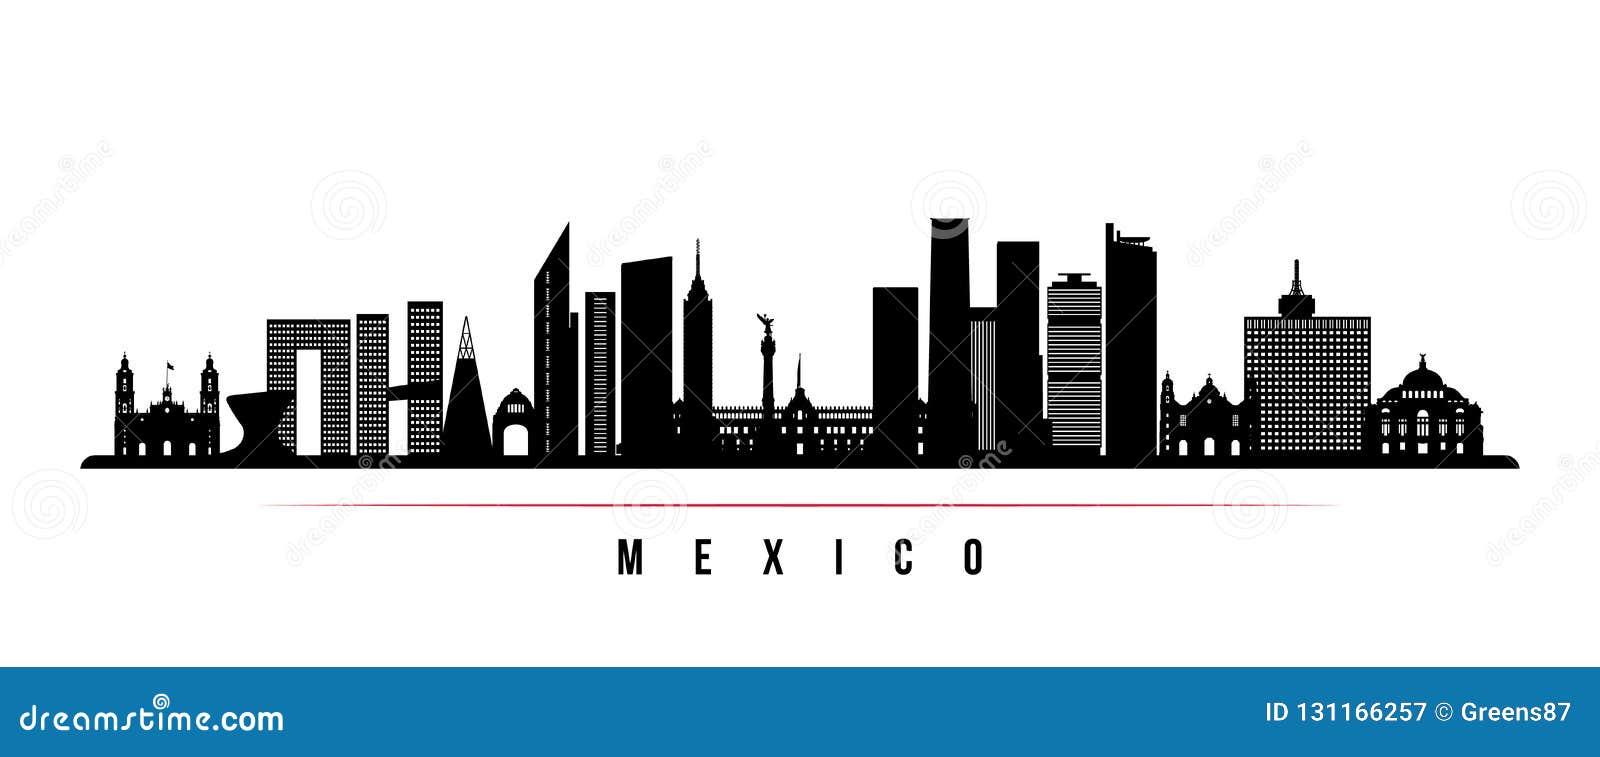 mexico city skyline horizontal banner.